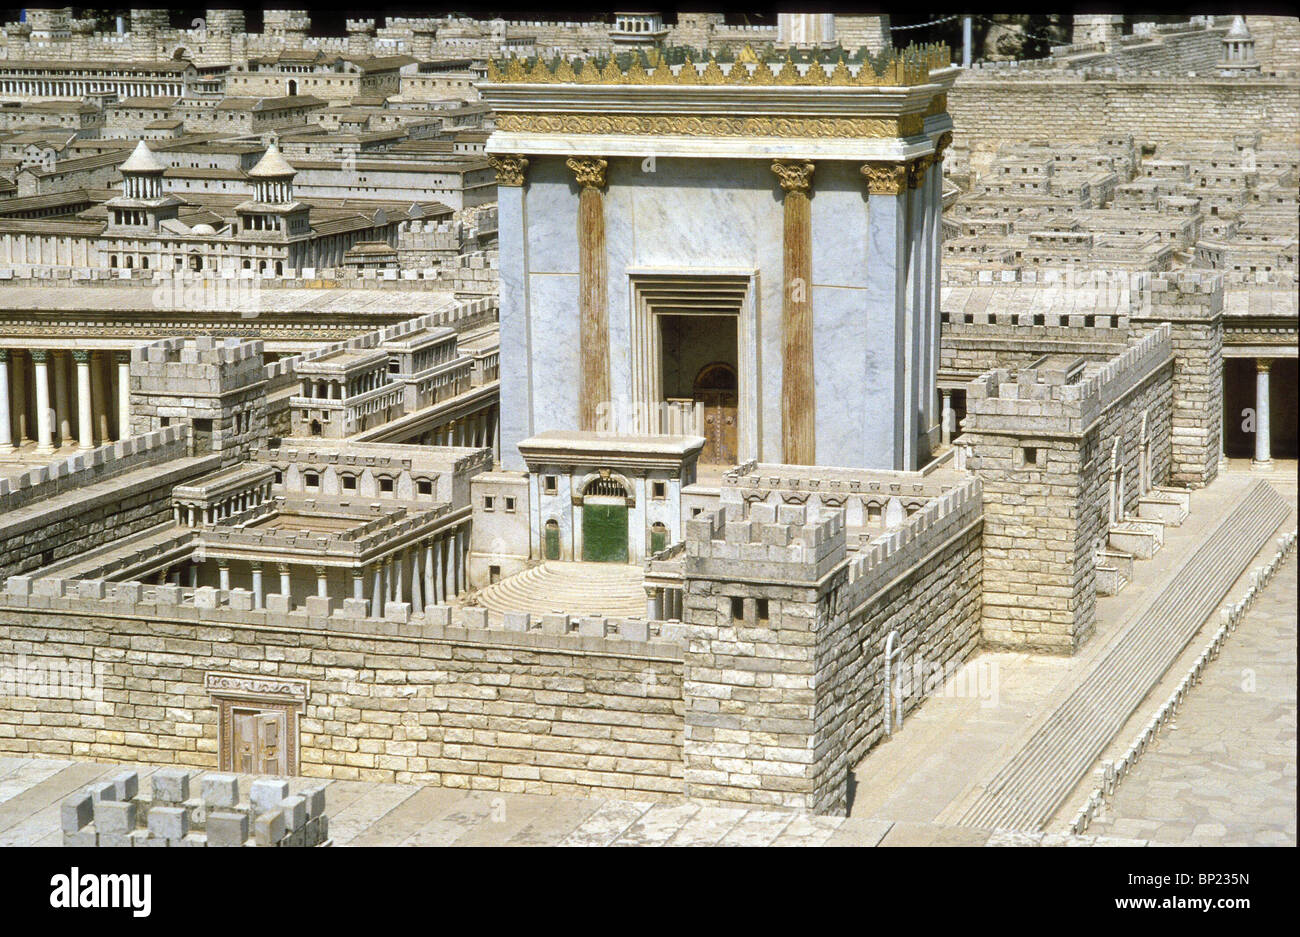 modell-des-herodes-tempel-in-jerusalem-der-tempel-war-ein-50-m-hoher